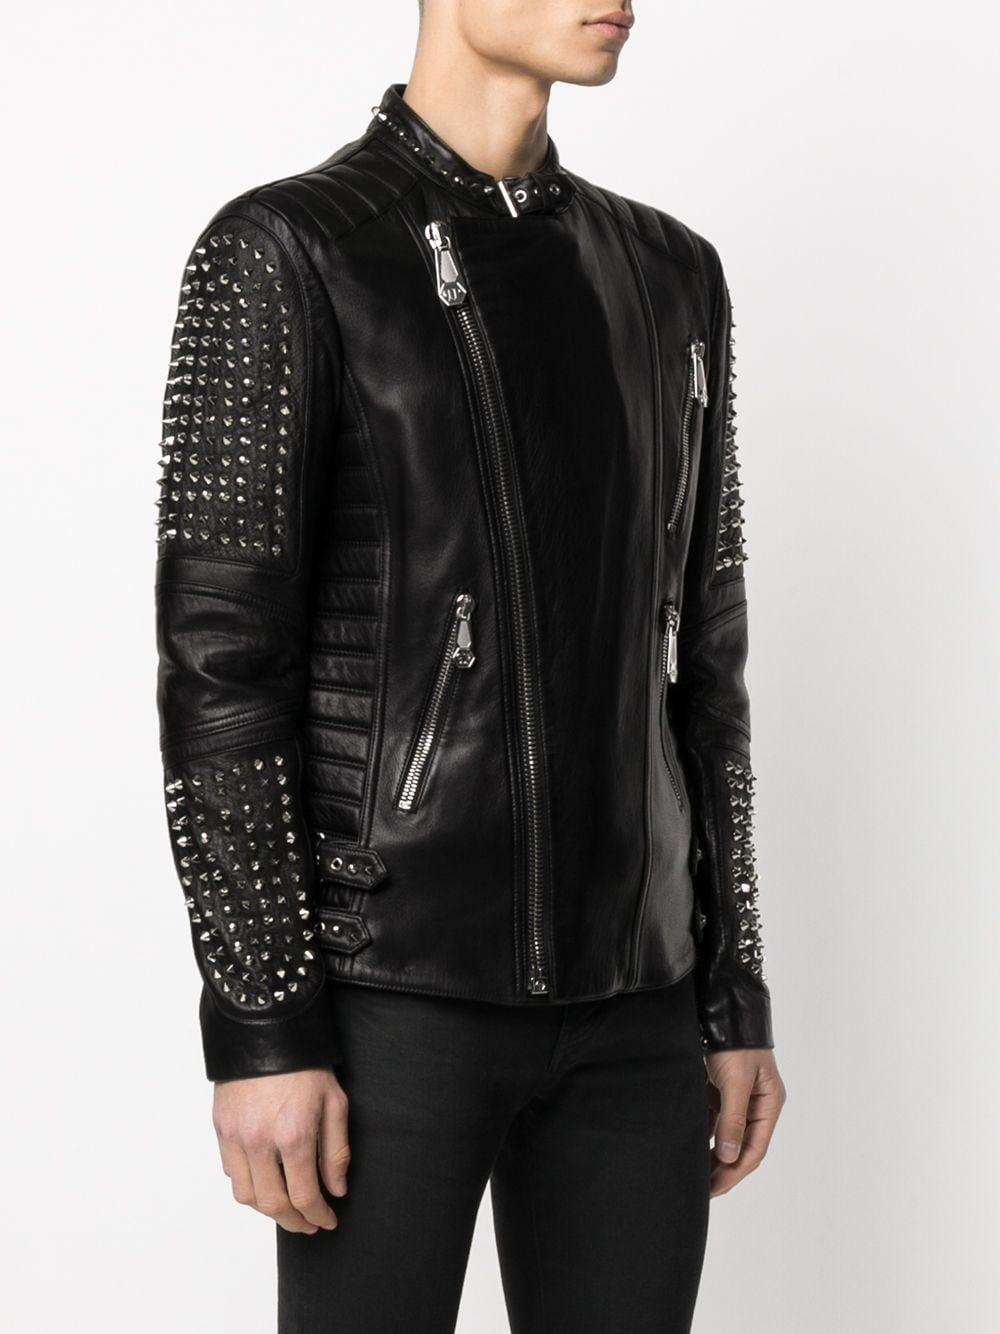 Philipp Plein Leather Zipped Studded Biker Jacket in Black for Men - Lyst